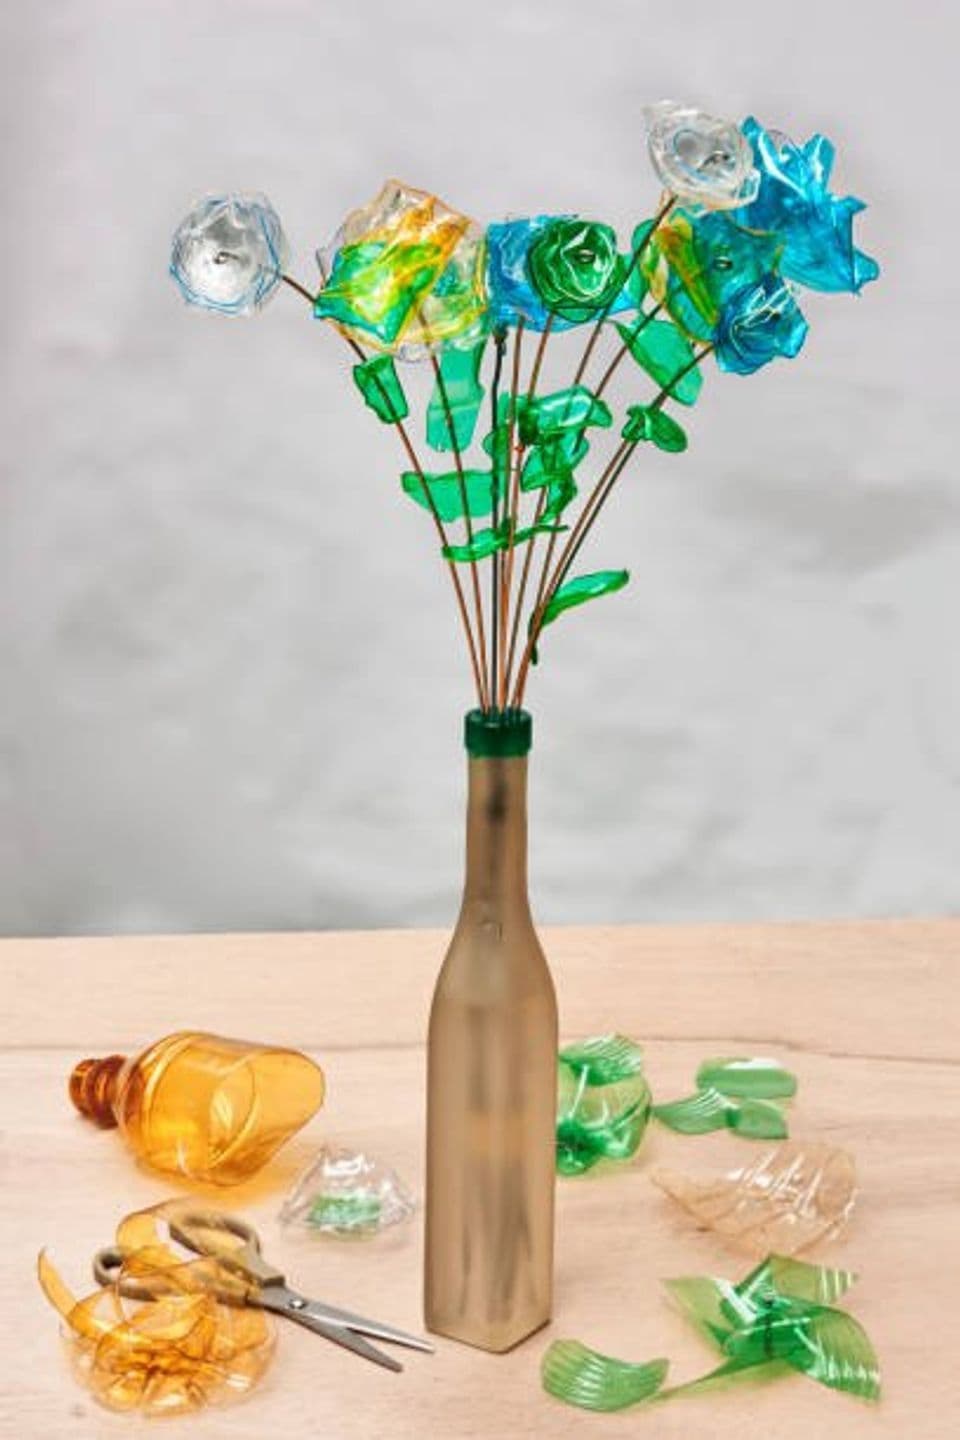 Peluang Usaha dan Cara Membuat Bunga dari Botol Plastik Bekas yang Bernilai Jual Ekonomis